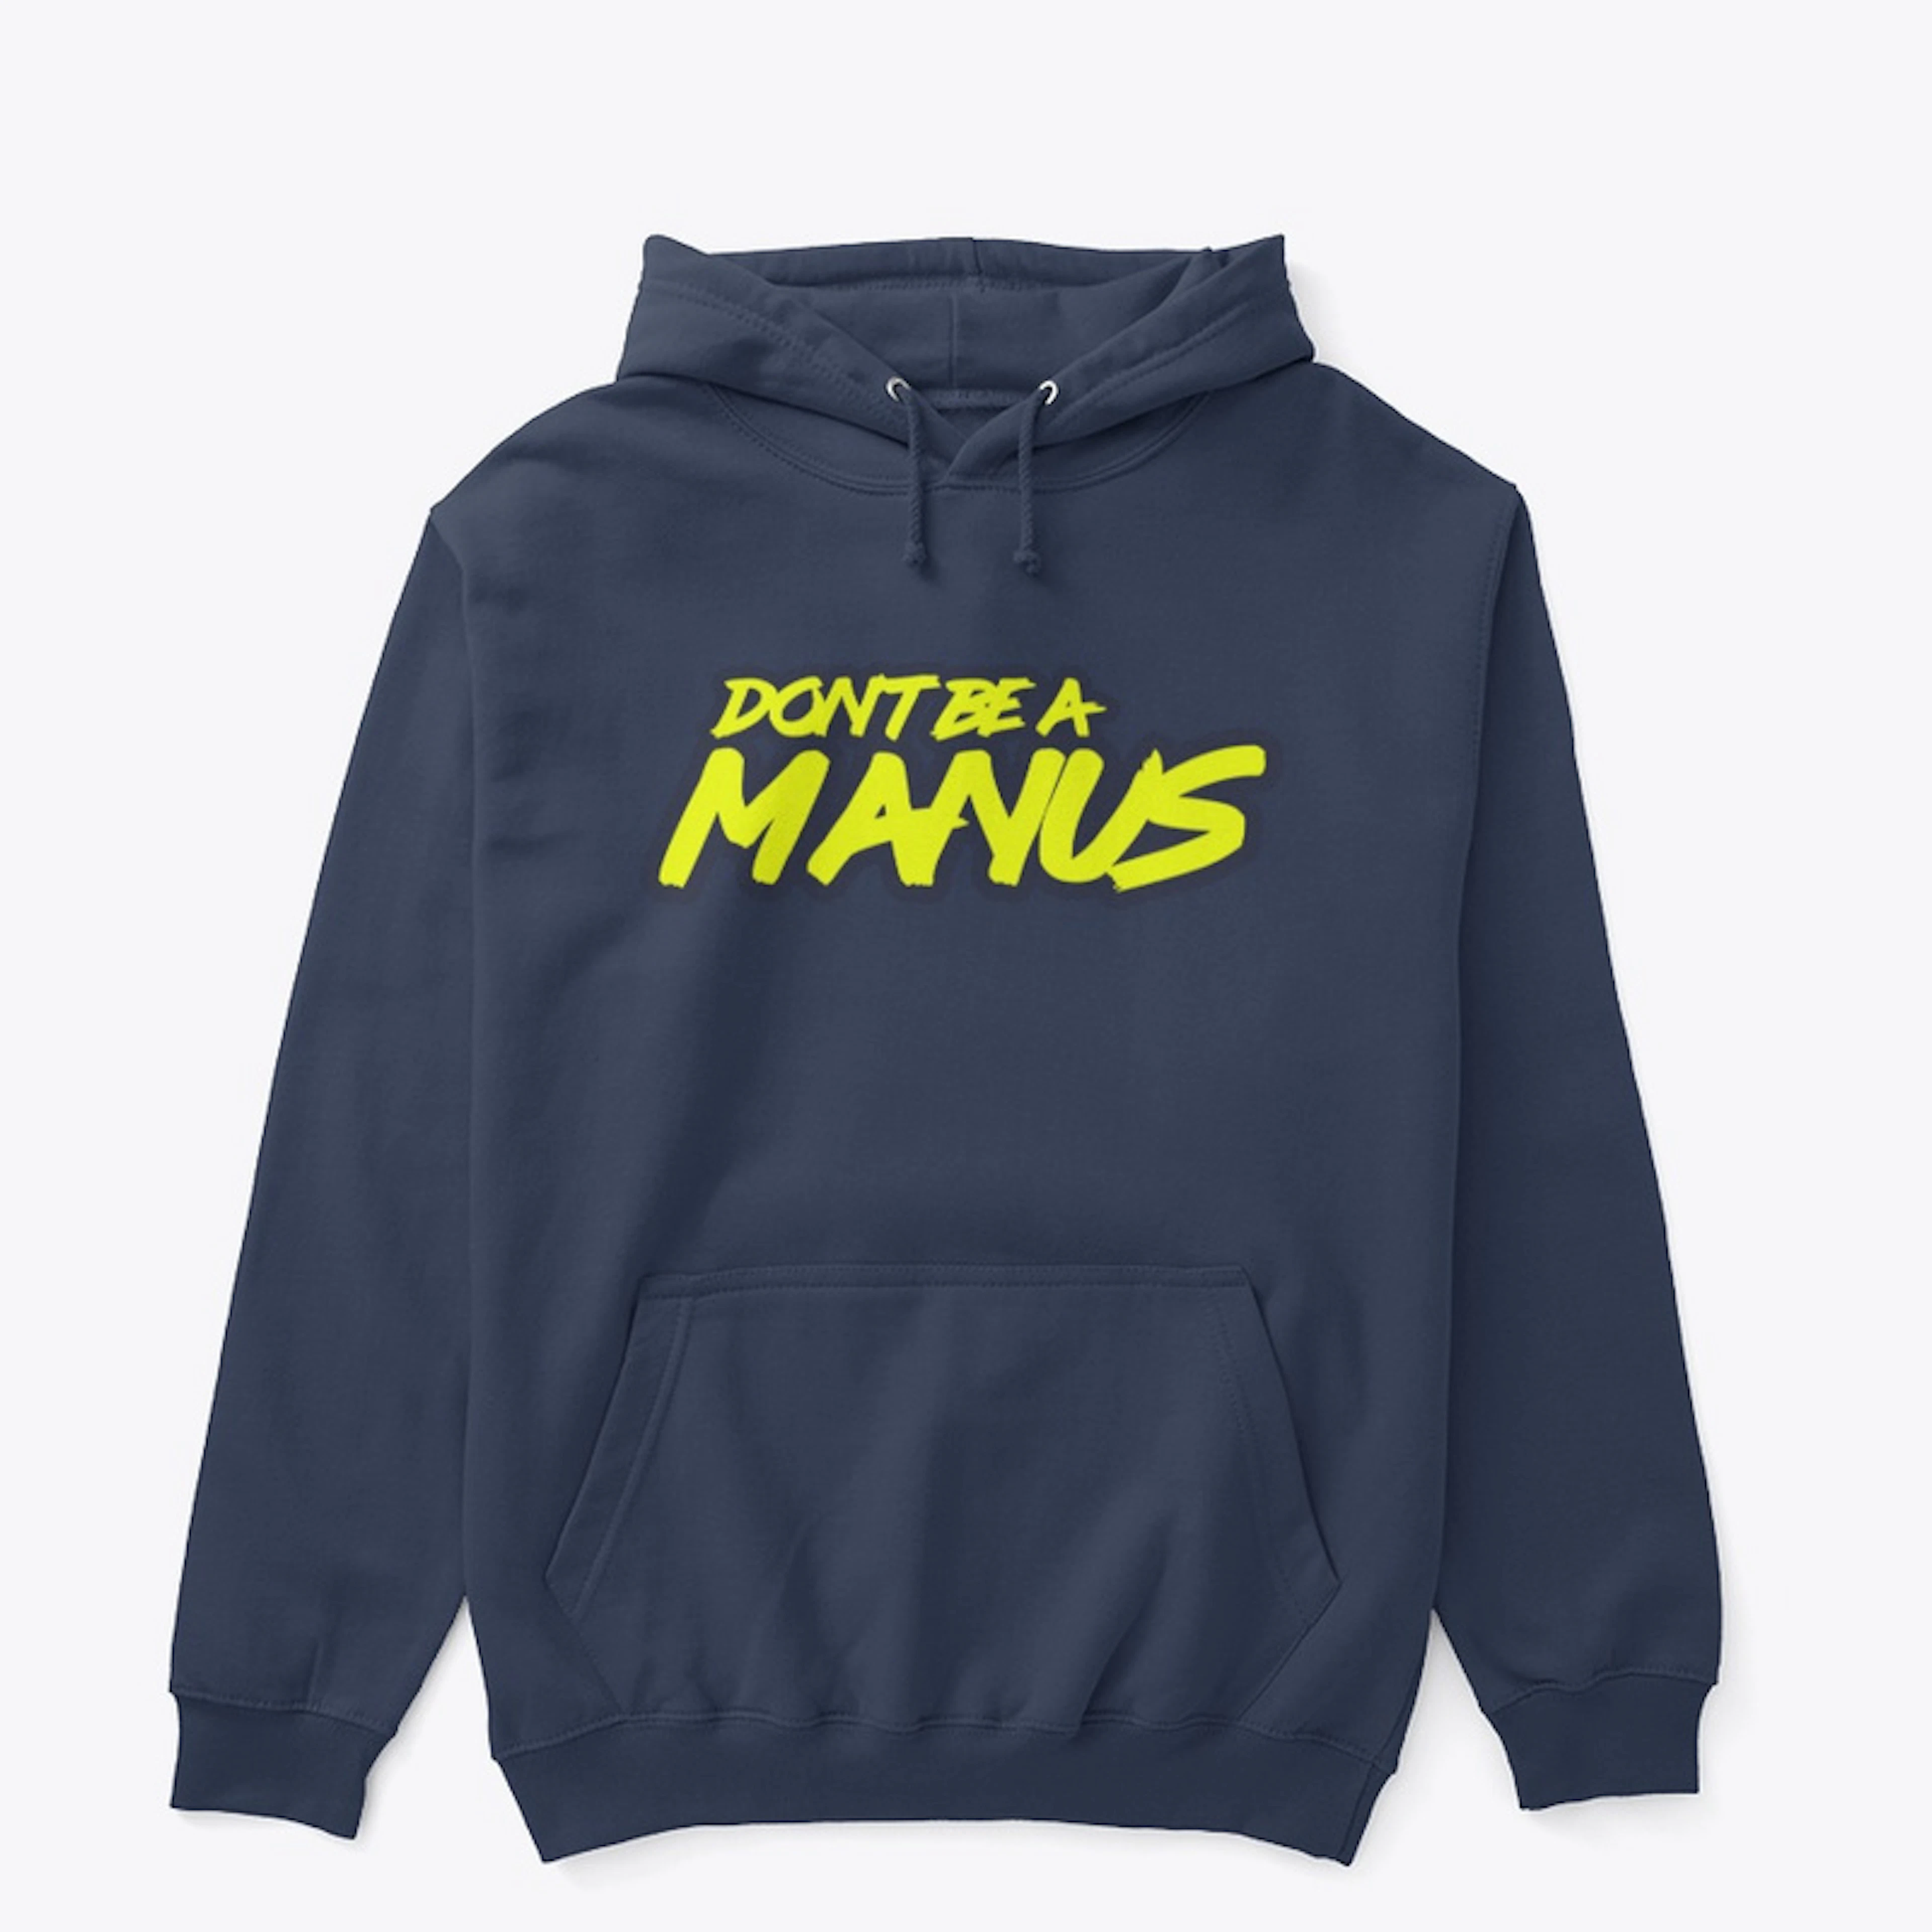 Don't Be A Manus hoodie